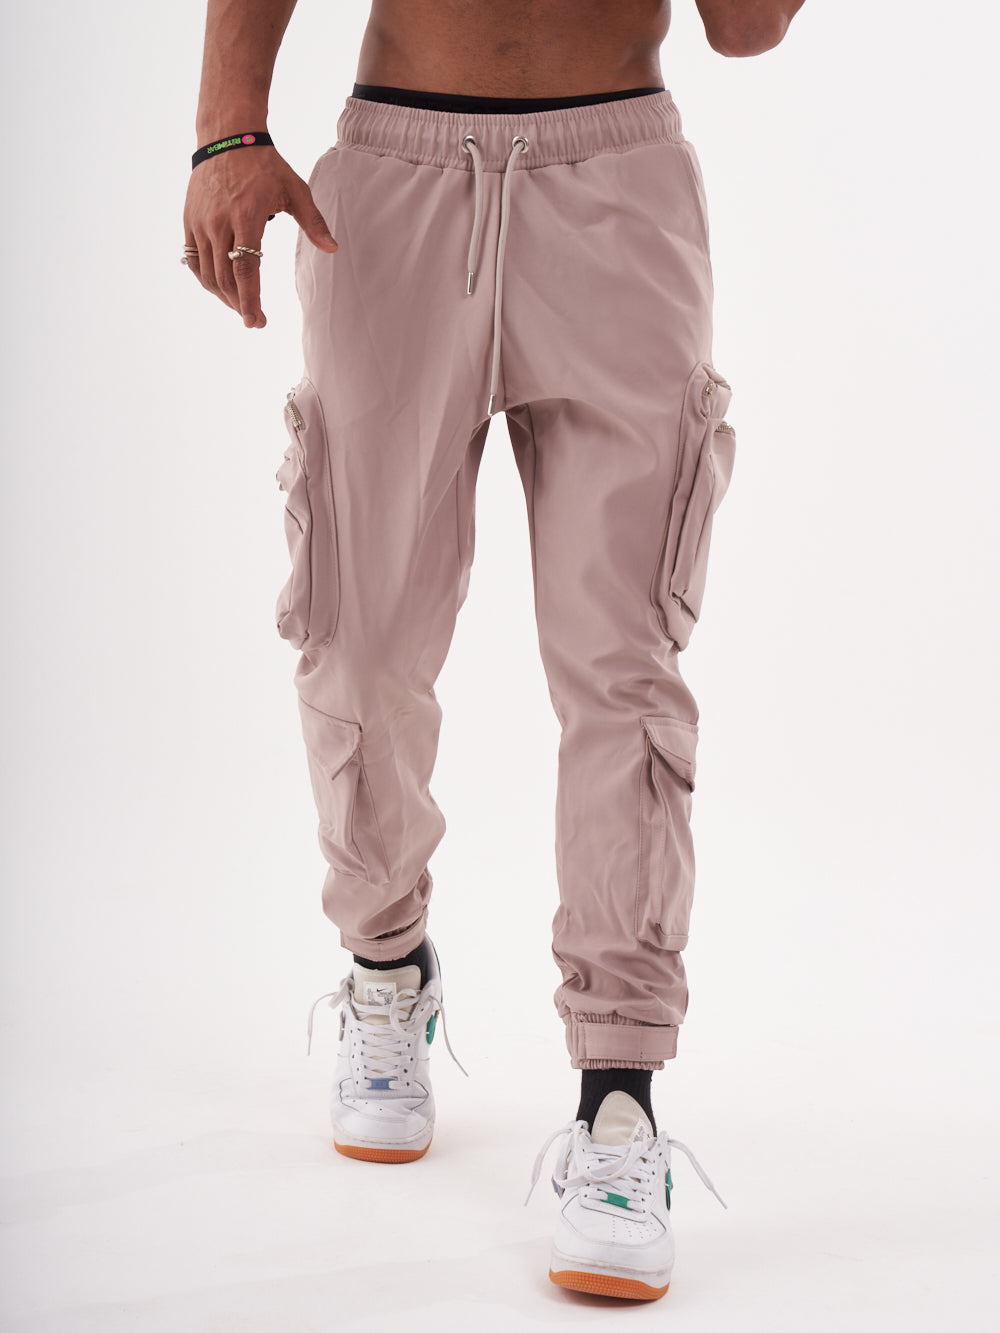 A man wearing SPUNK JOGGERS | MAUVE cargo jogger pants.